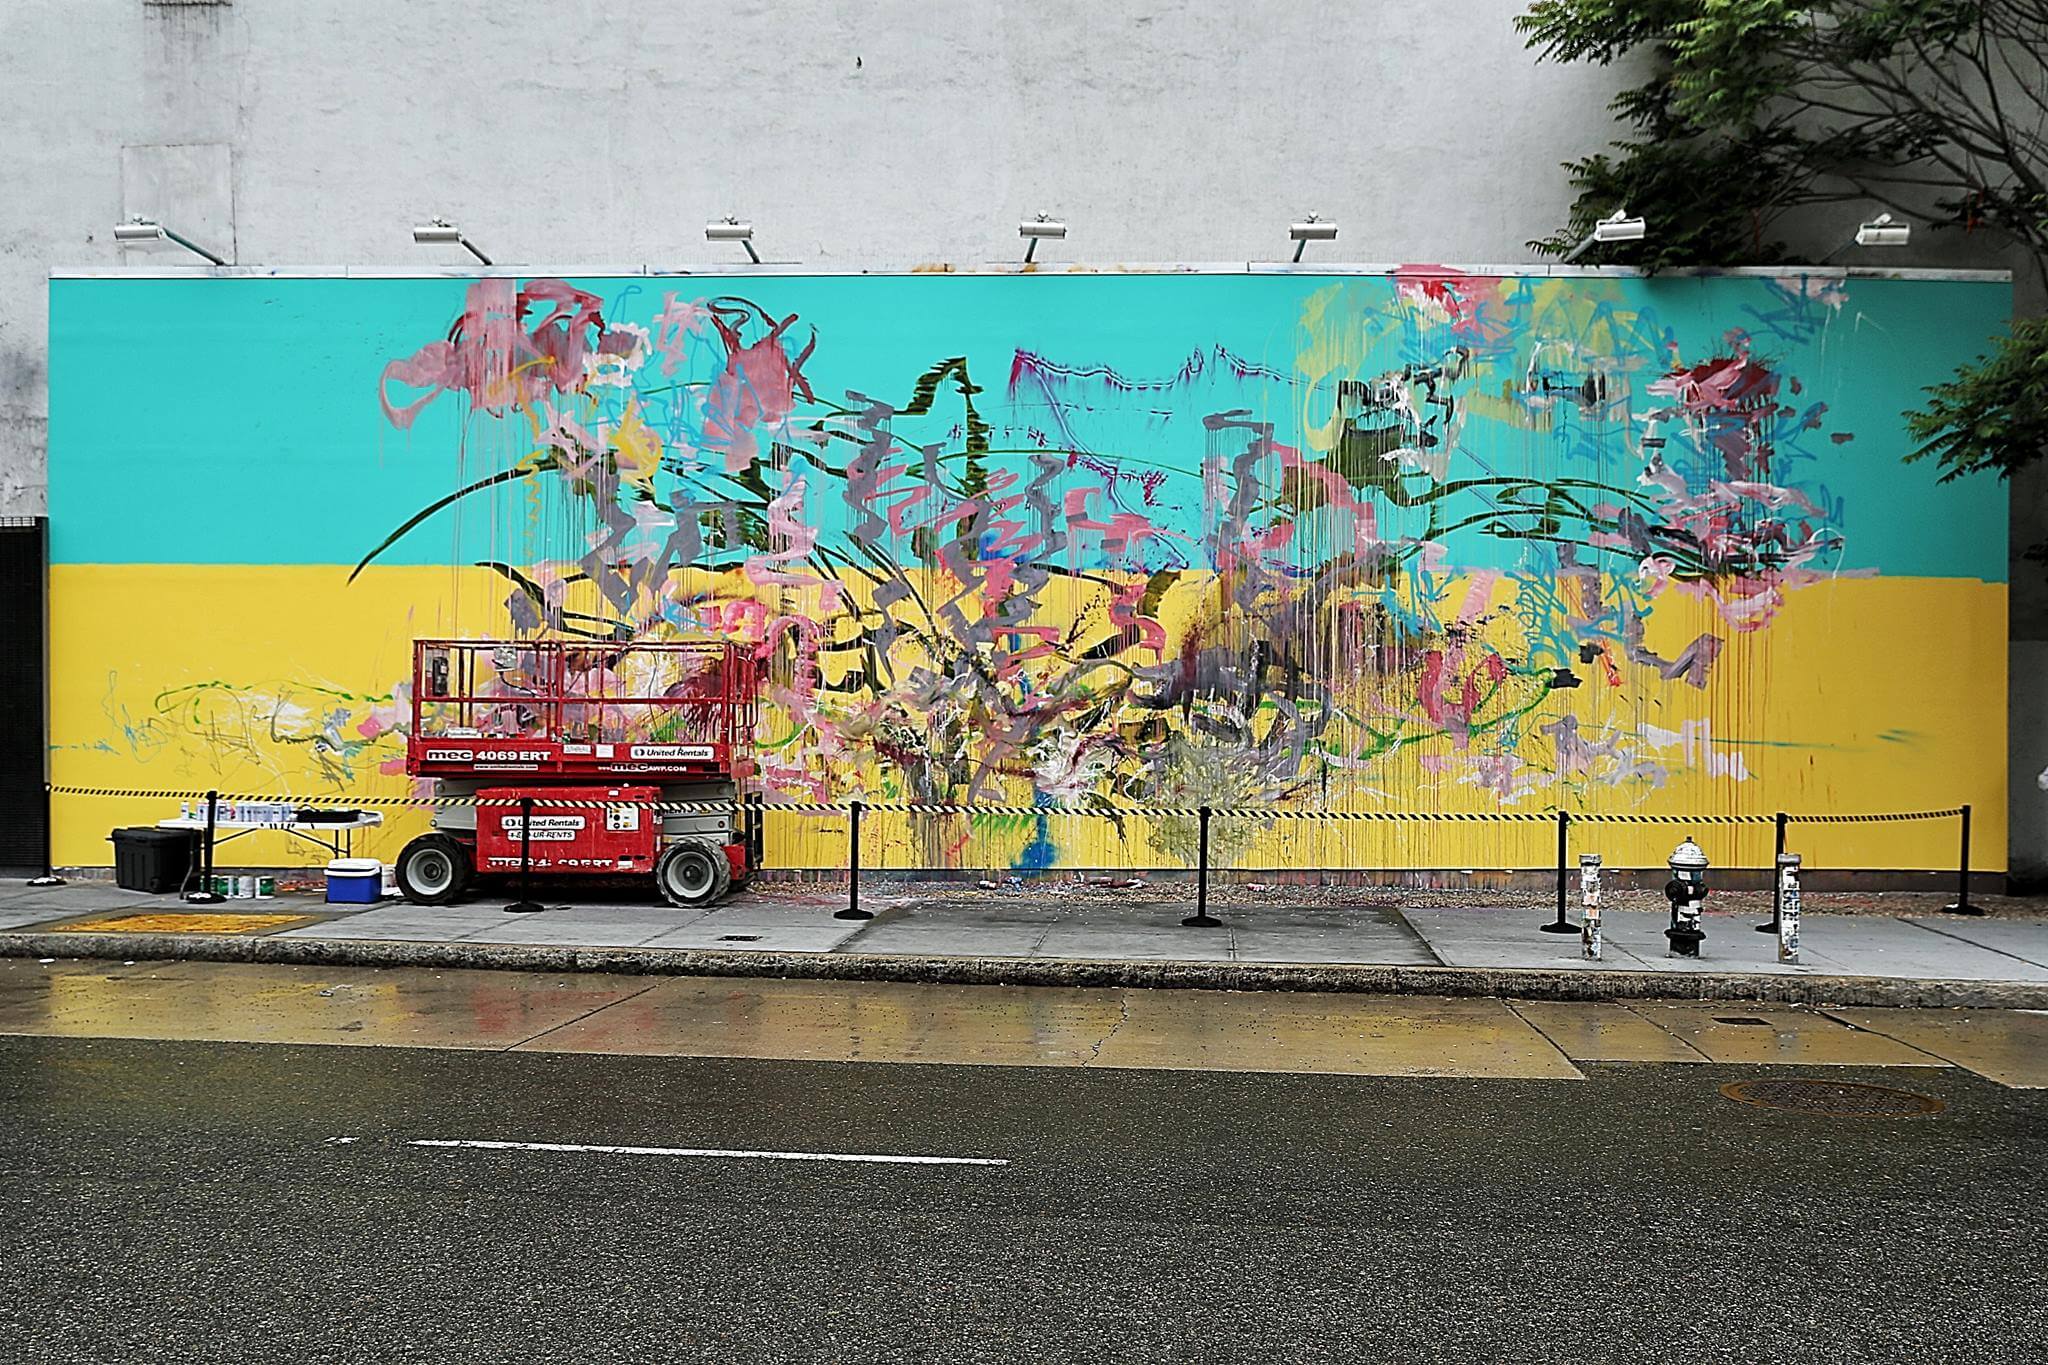 New mural by David Choe on the iconic Houston Bowery Graffiti Wall ...